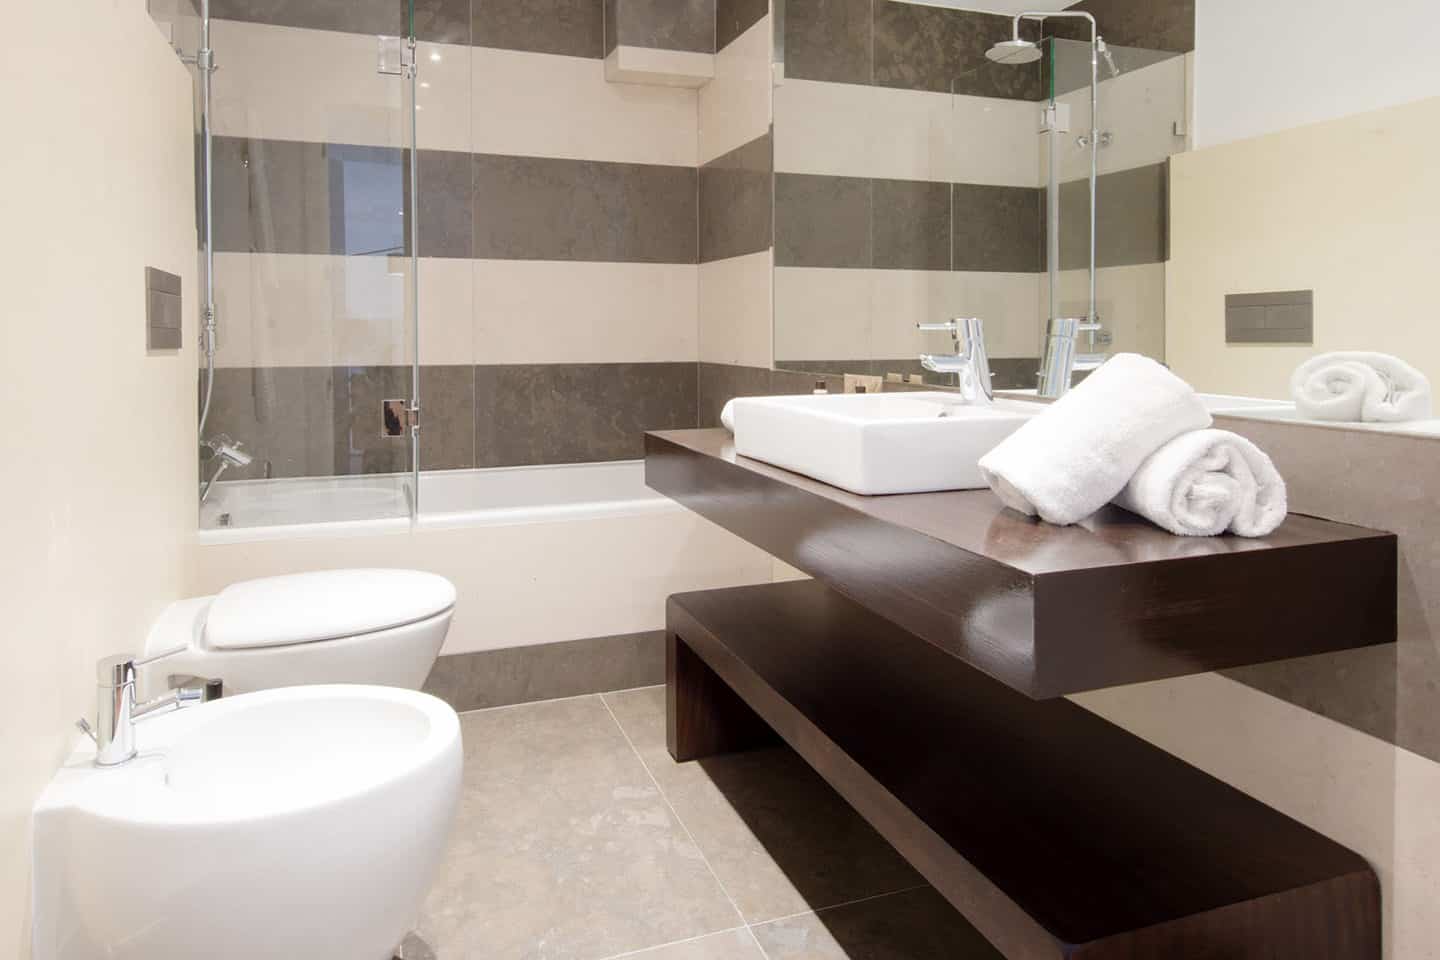 Deluxe Studio bathroom with shower-bathtub combination.